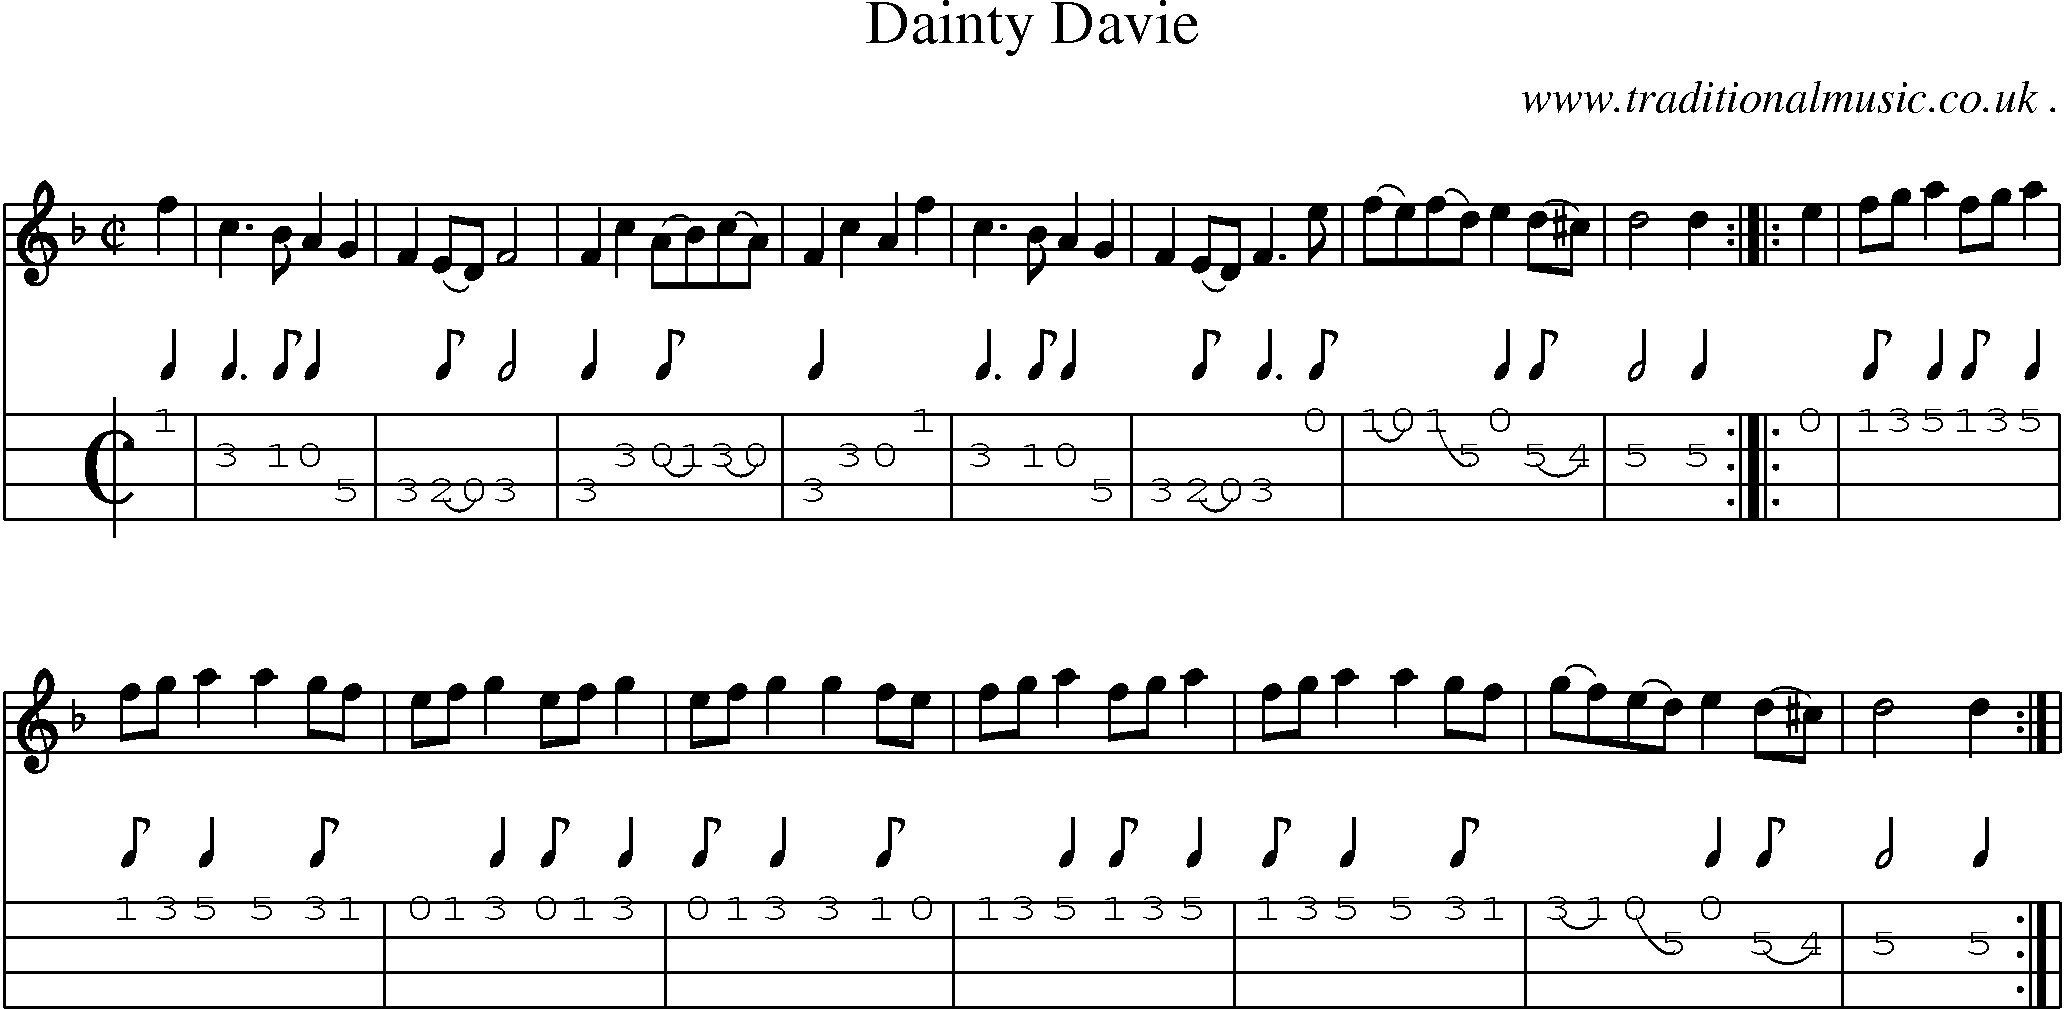 Sheet-Music and Mandolin Tabs for Dainty Davie